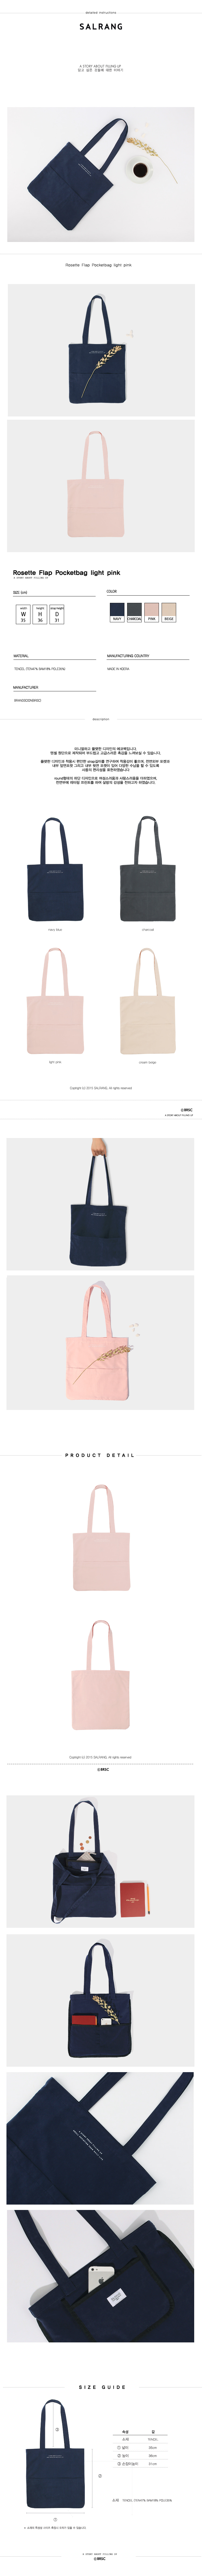 Rosette Flap Pocket bag light pink 28,000원 - 살랑 패션잡화, 가방, 에코백, 심플 바보사랑 Rosette Flap Pocket bag light pink 28,000원 - 살랑 패션잡화, 가방, 에코백, 심플 바보사랑